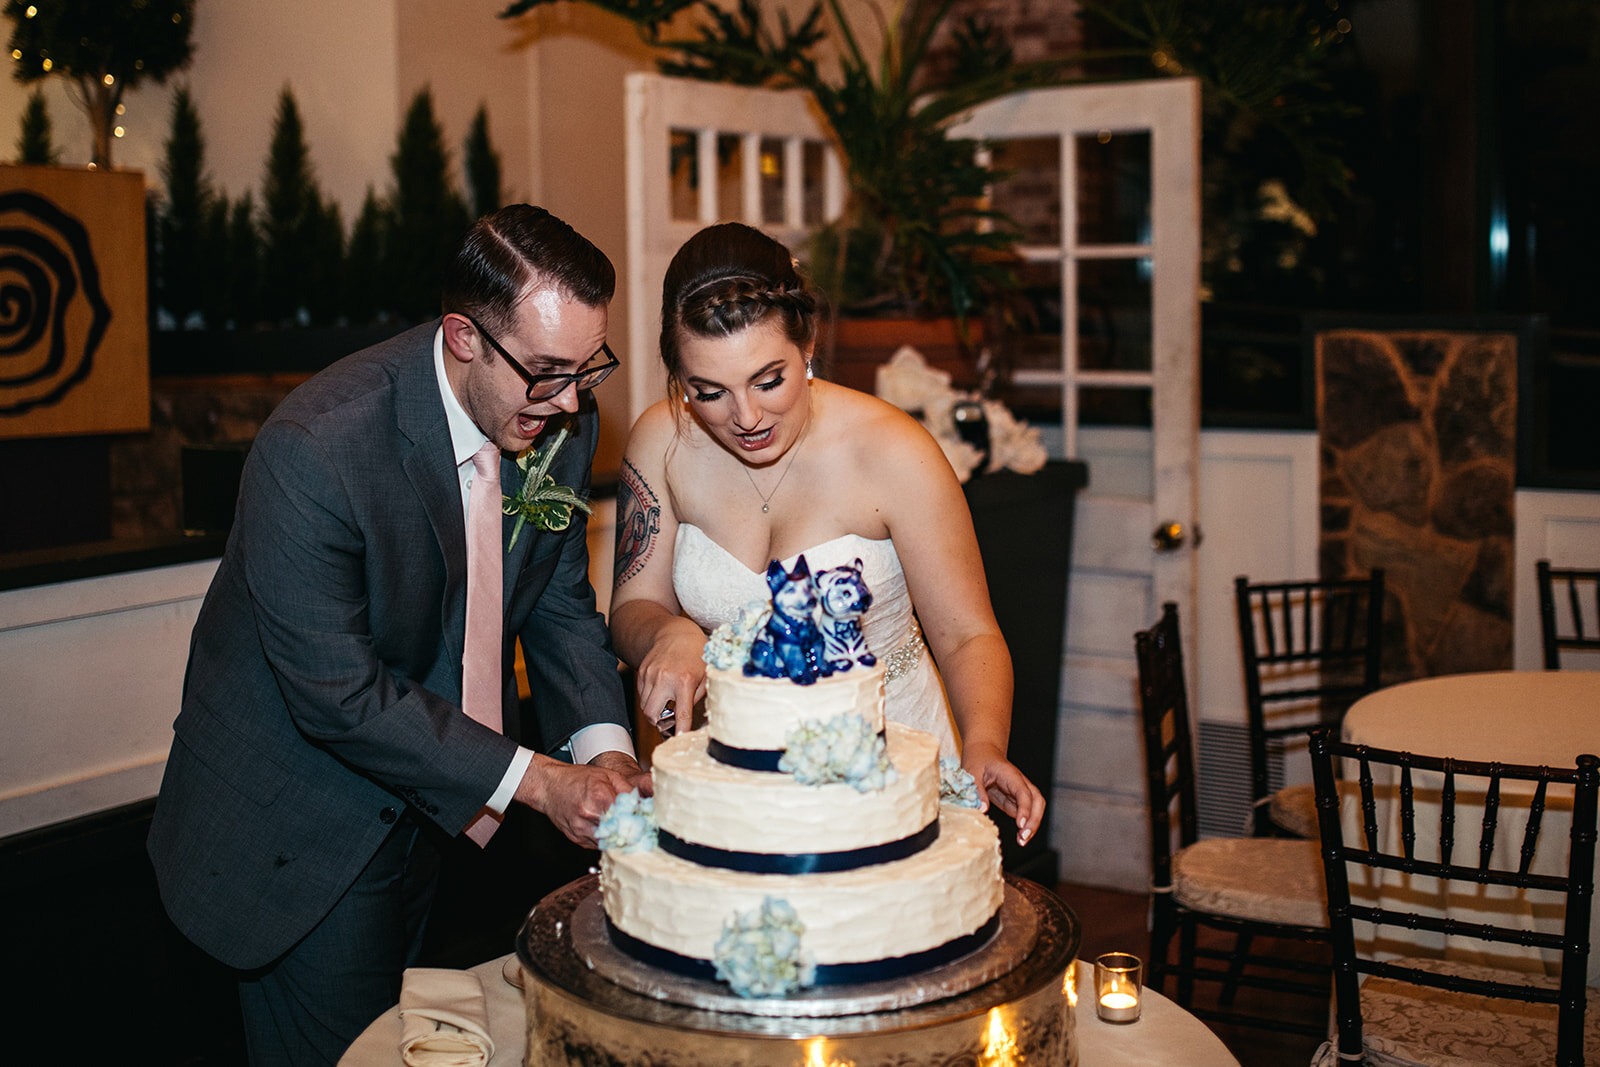 Newlyweds cutting the cake in Hartford CT Shawnee Custalow photography